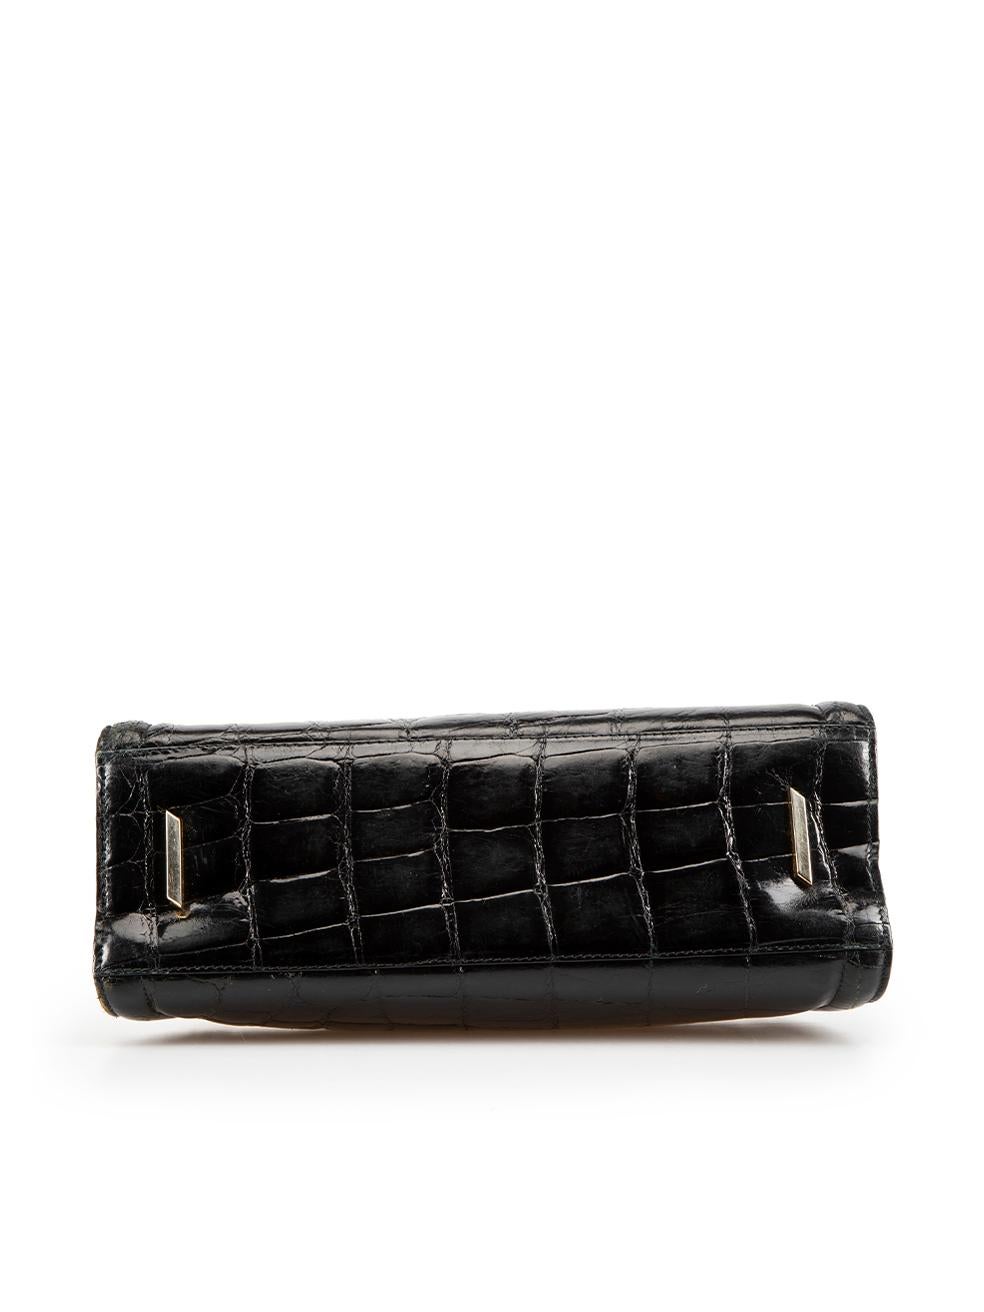 Women's Donna Elissa Black Patent Croc Embossed Handbag